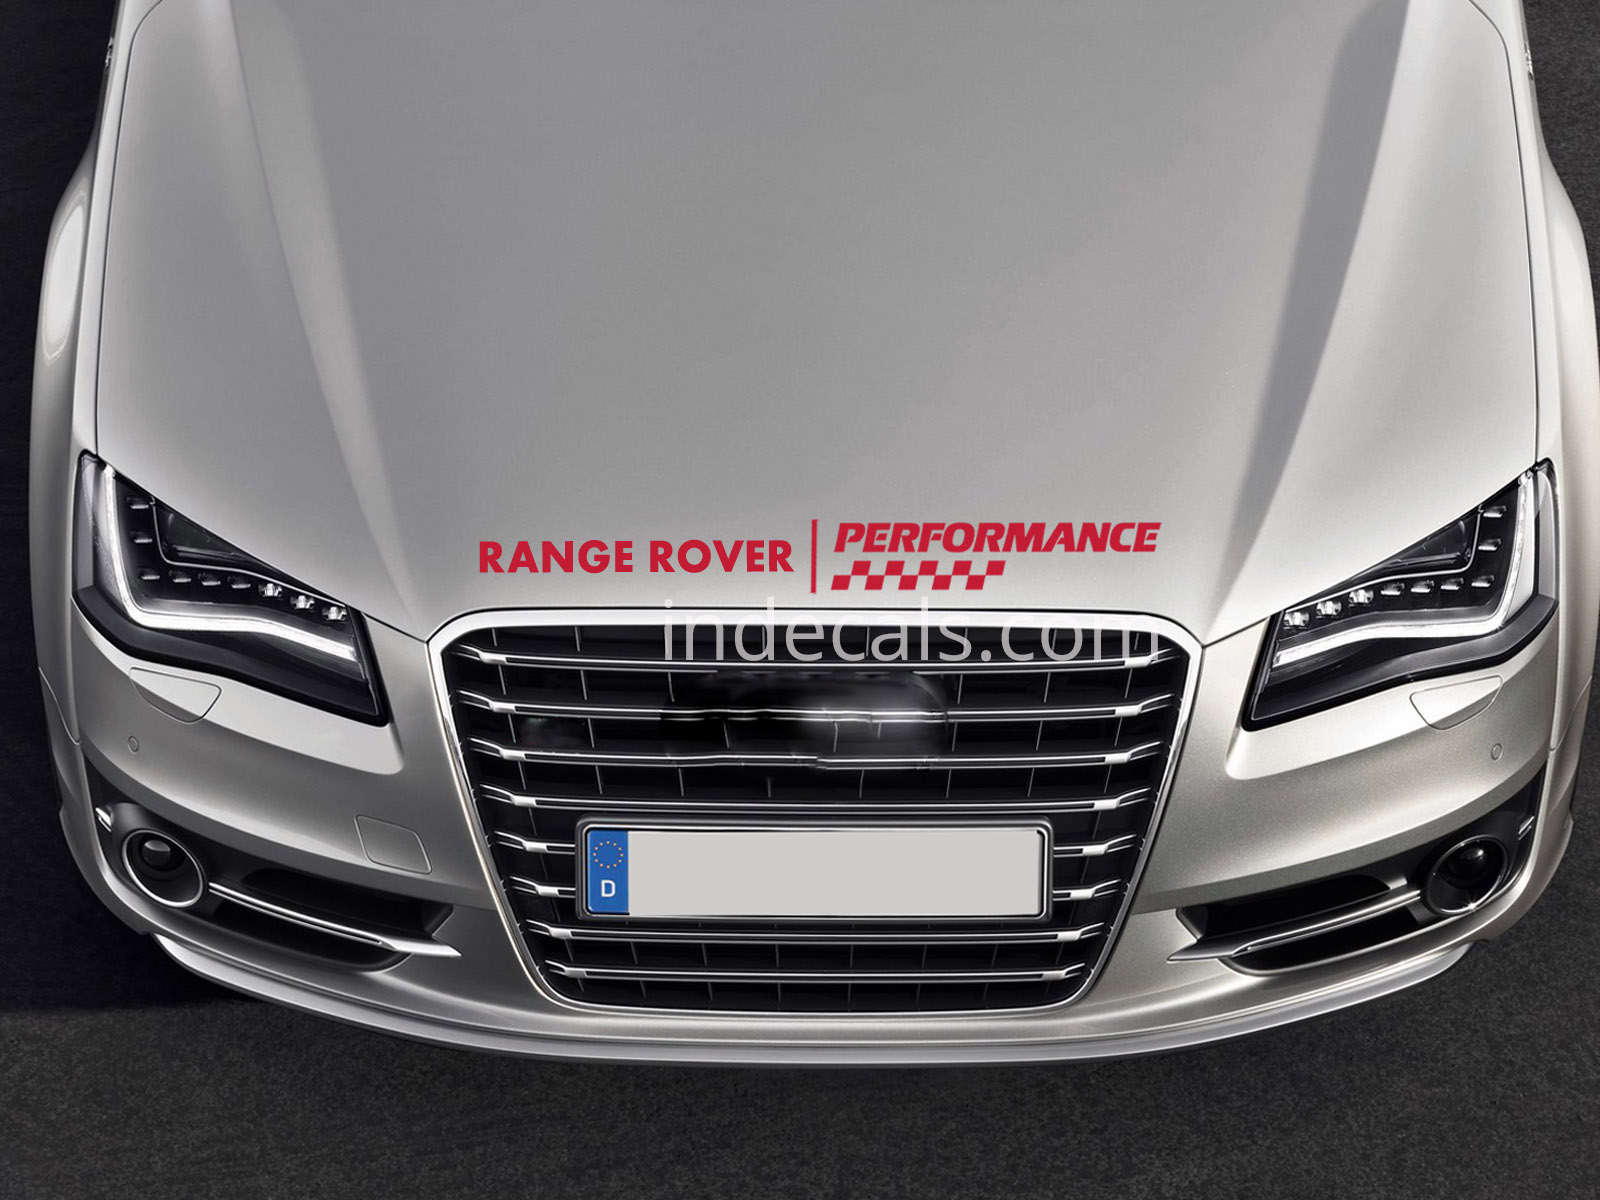 1 x Range Rover Performance Sticker for Bonnet - Red